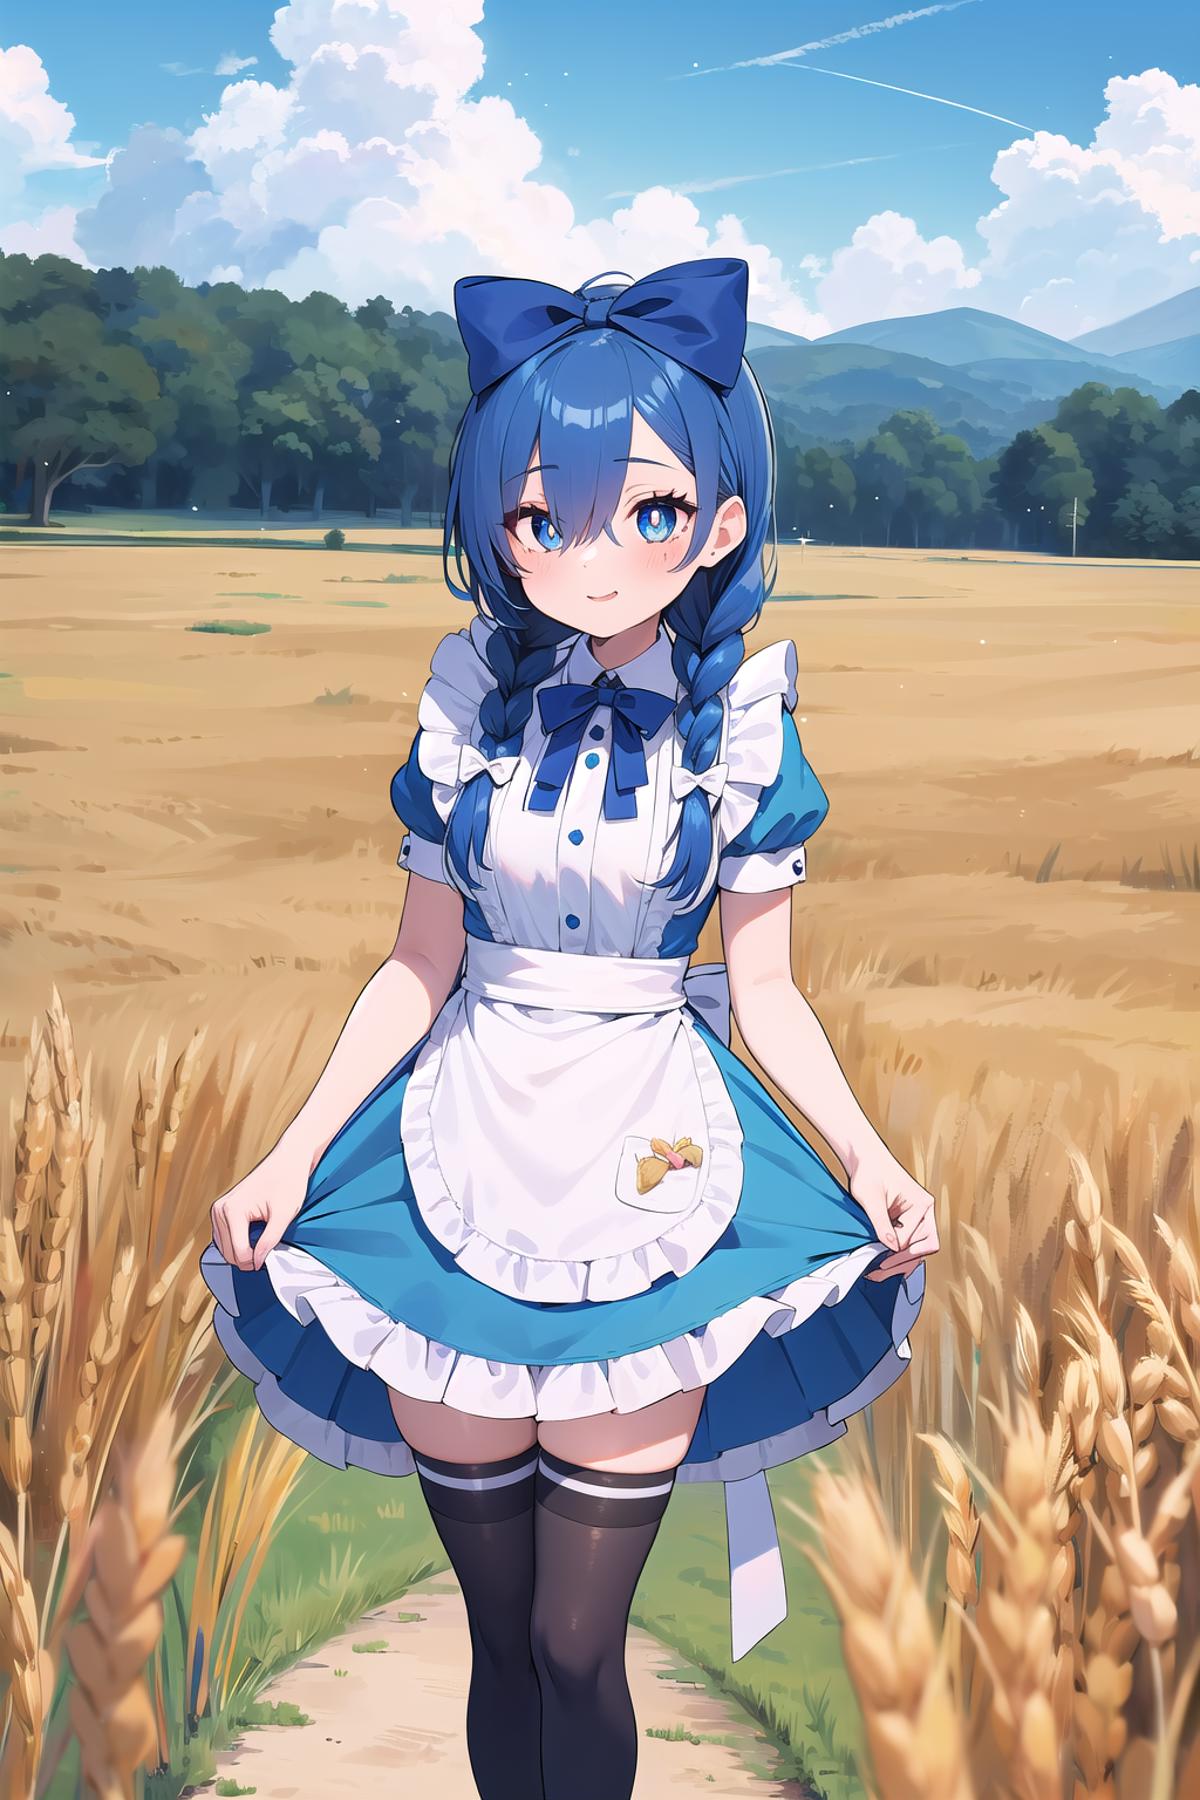 [Clothing] Alice-in-Wonderland Outft / 不思議の国のアリス衣装 image by memolemon123